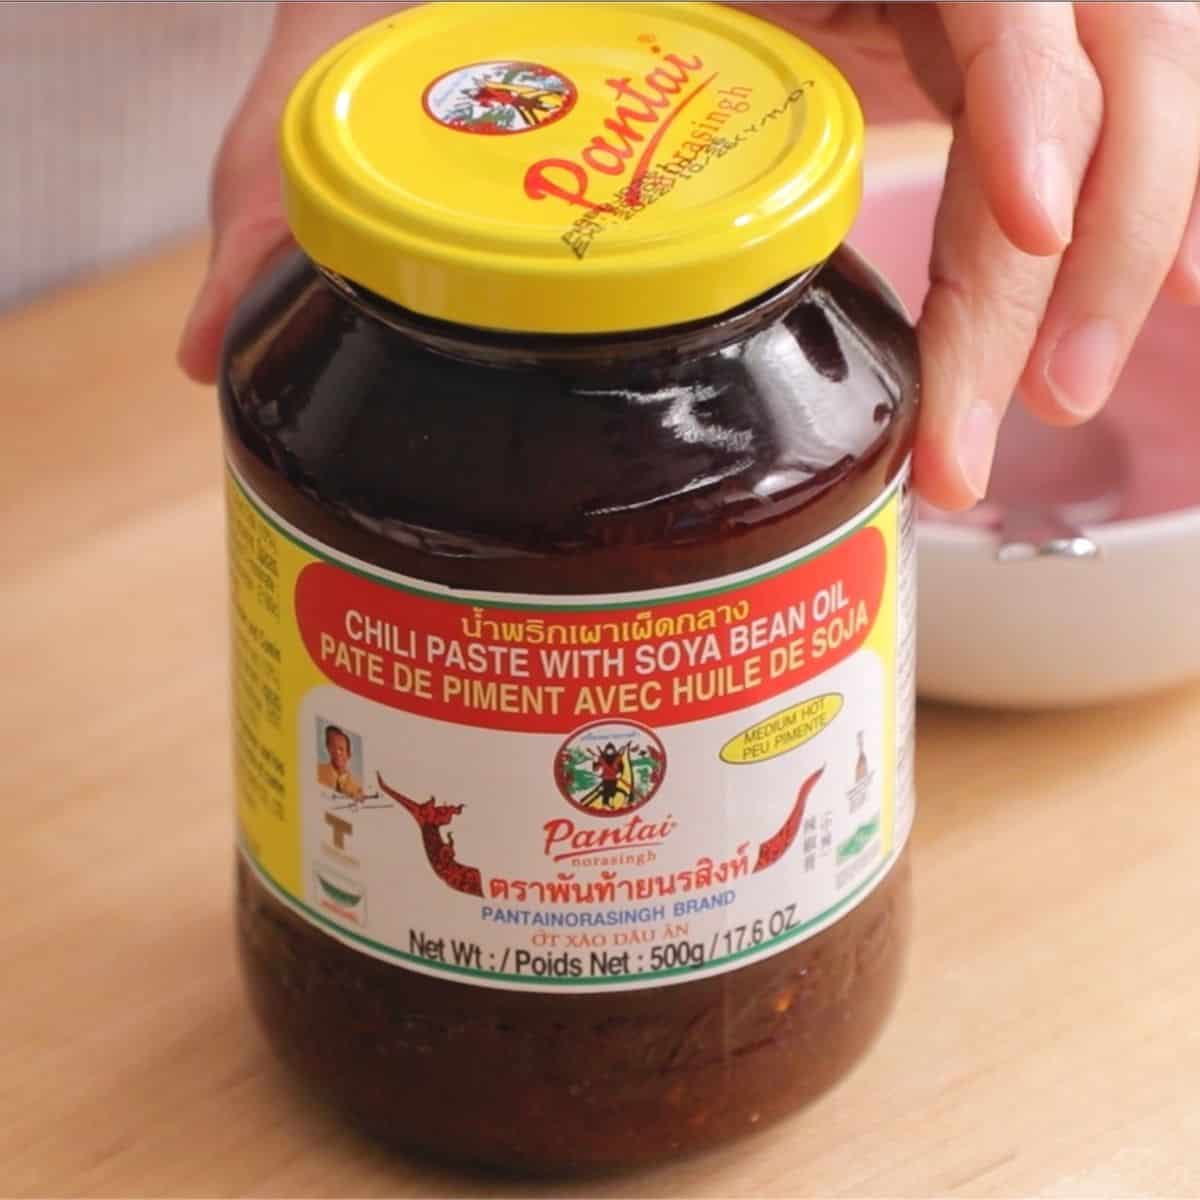 a jar of Thai chili paste - pantai brand